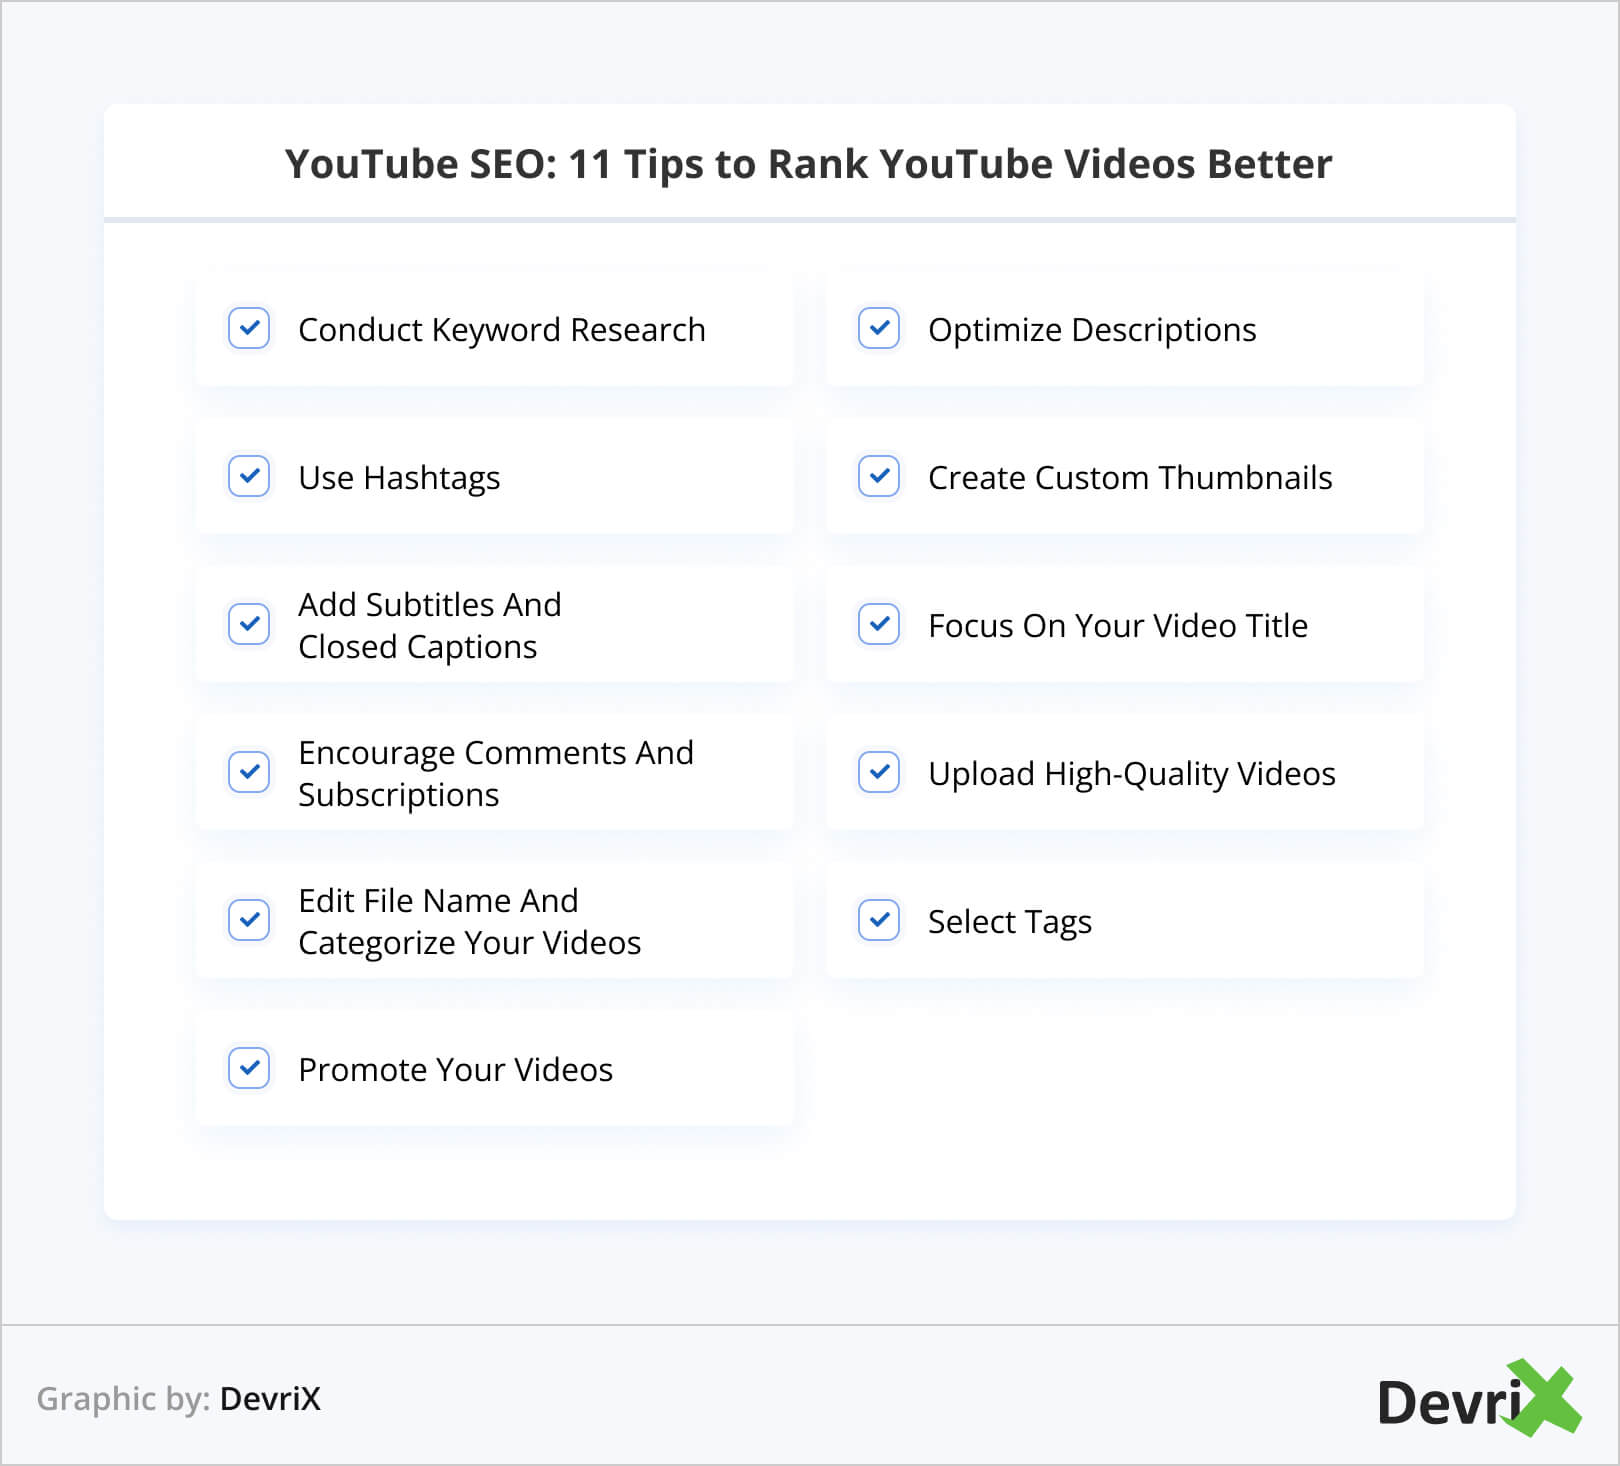 2. YouTube SEO_ 11 Tips to Rank YouTube Videos Better